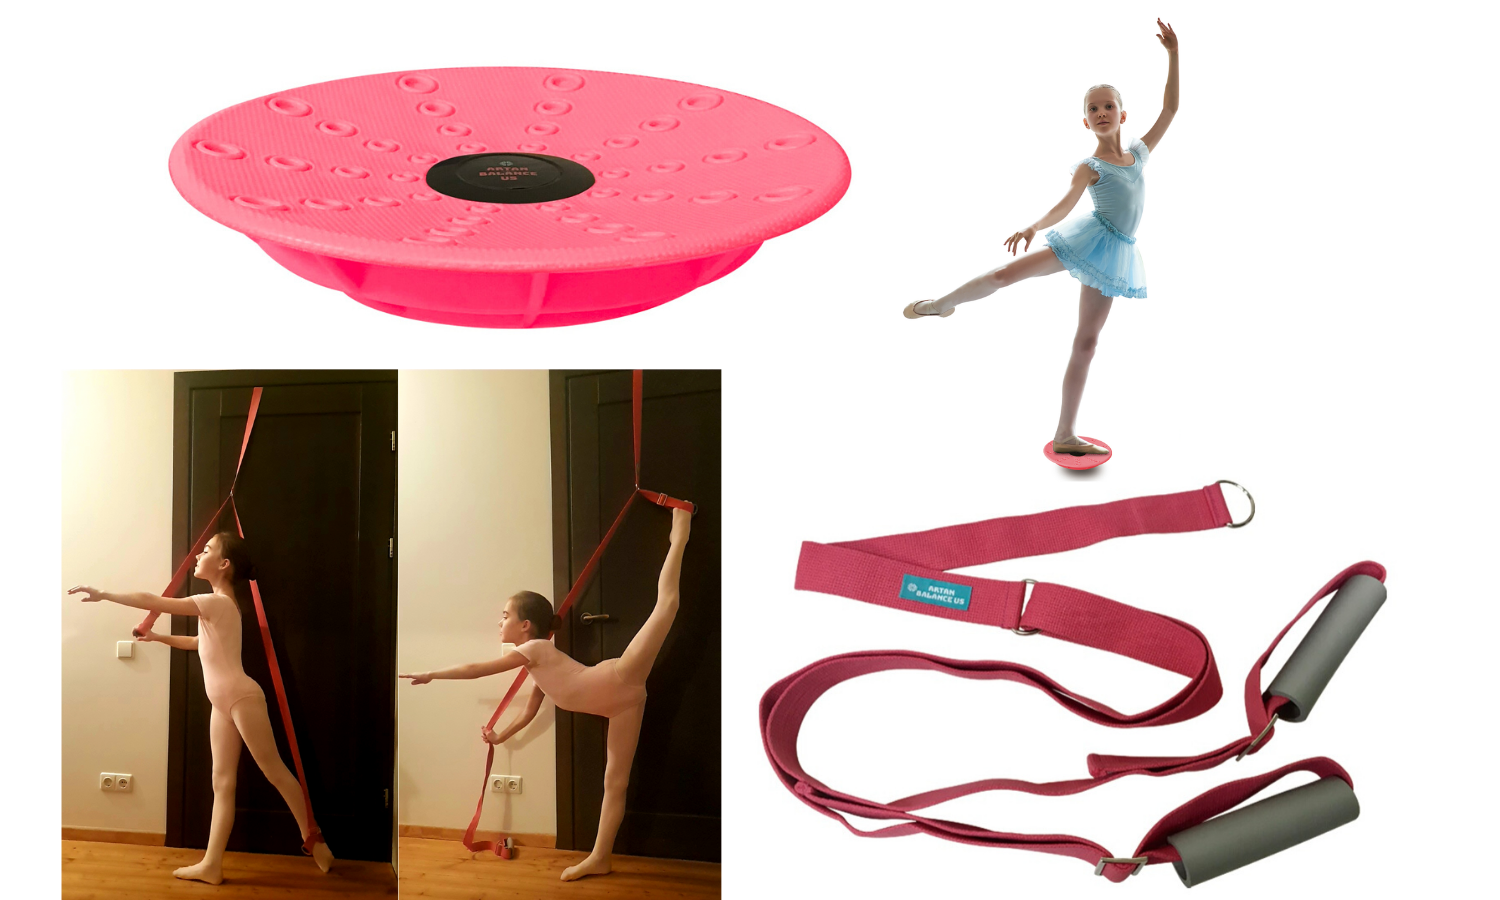 Leg Stretching Strap and Ballet Balance Board, 2 Pc. Set